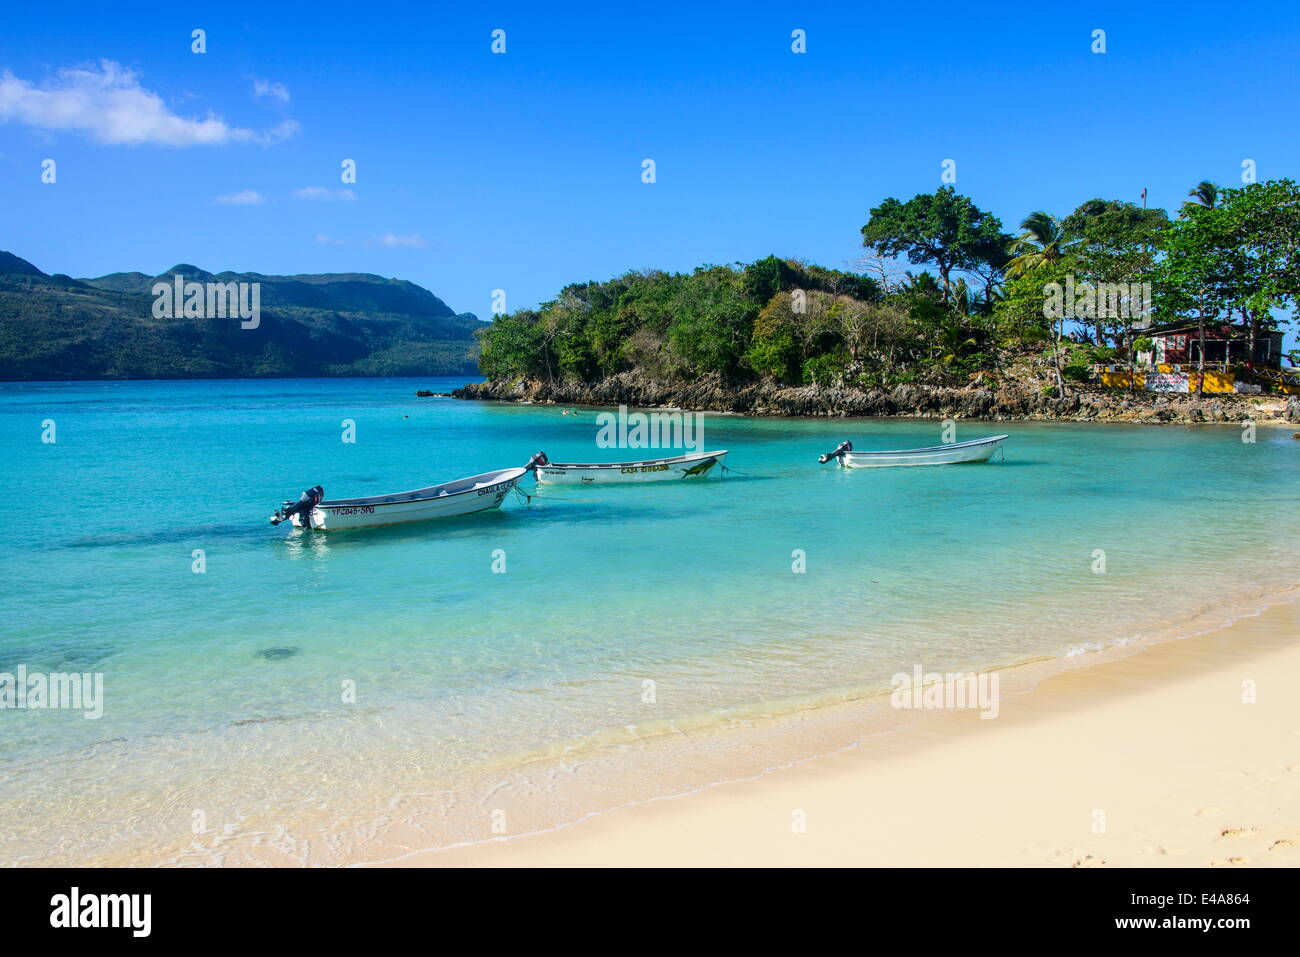 Playa Rincon, Las Galeras, Semana peninsula, Dominican Republic, West Indies, Caribbean, Central America Stock Photo